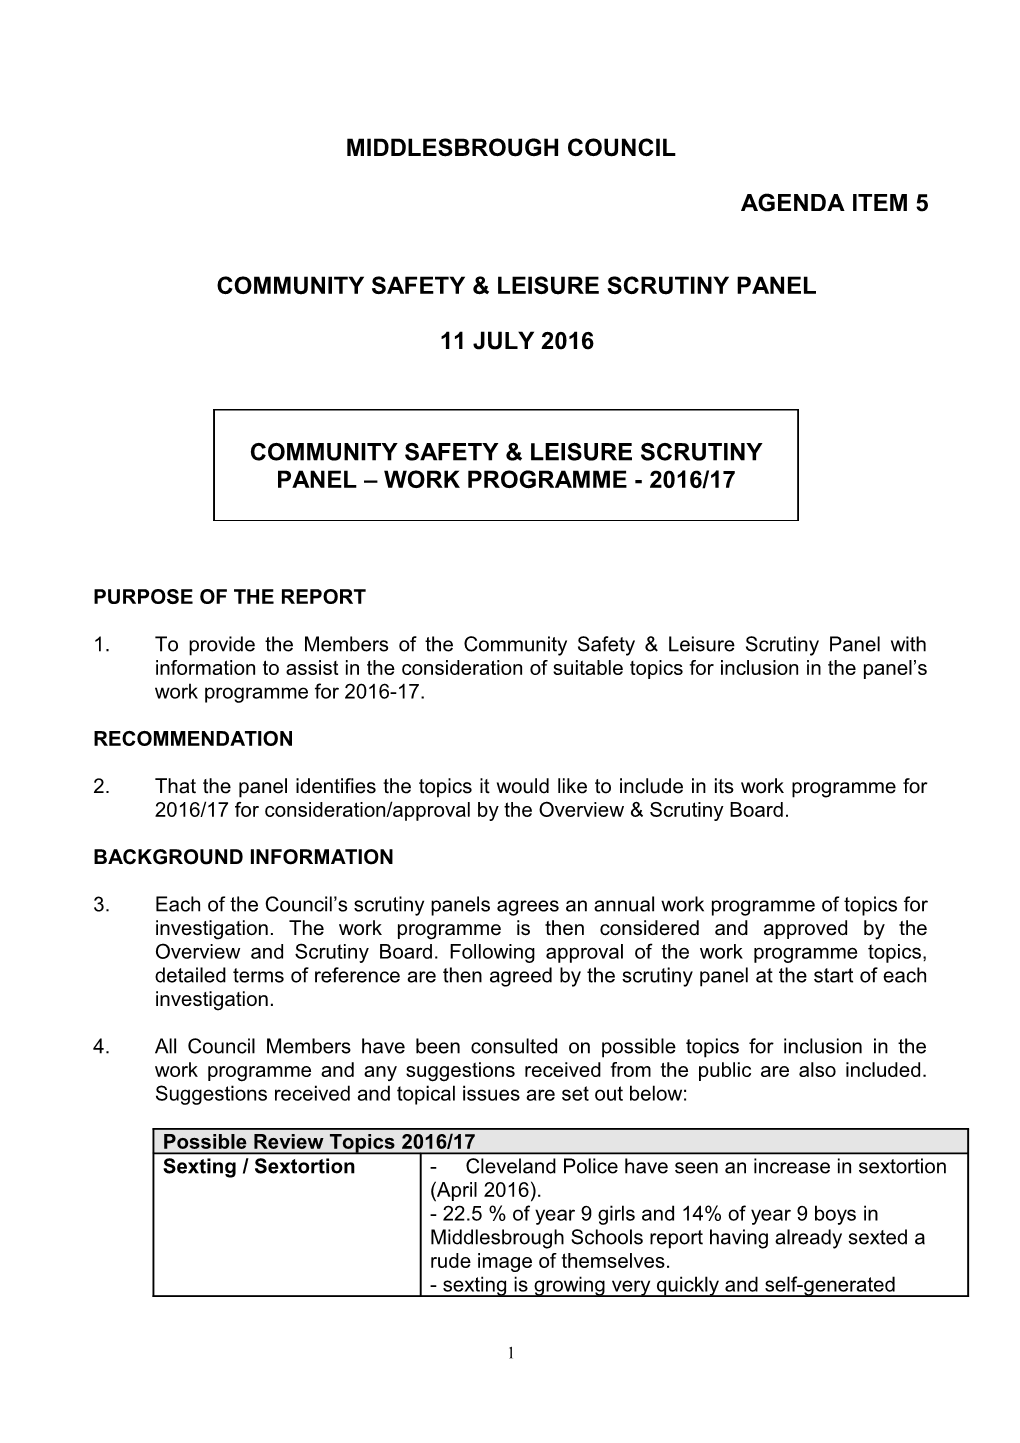 Community Safety & Leisure Scrutiny Panel